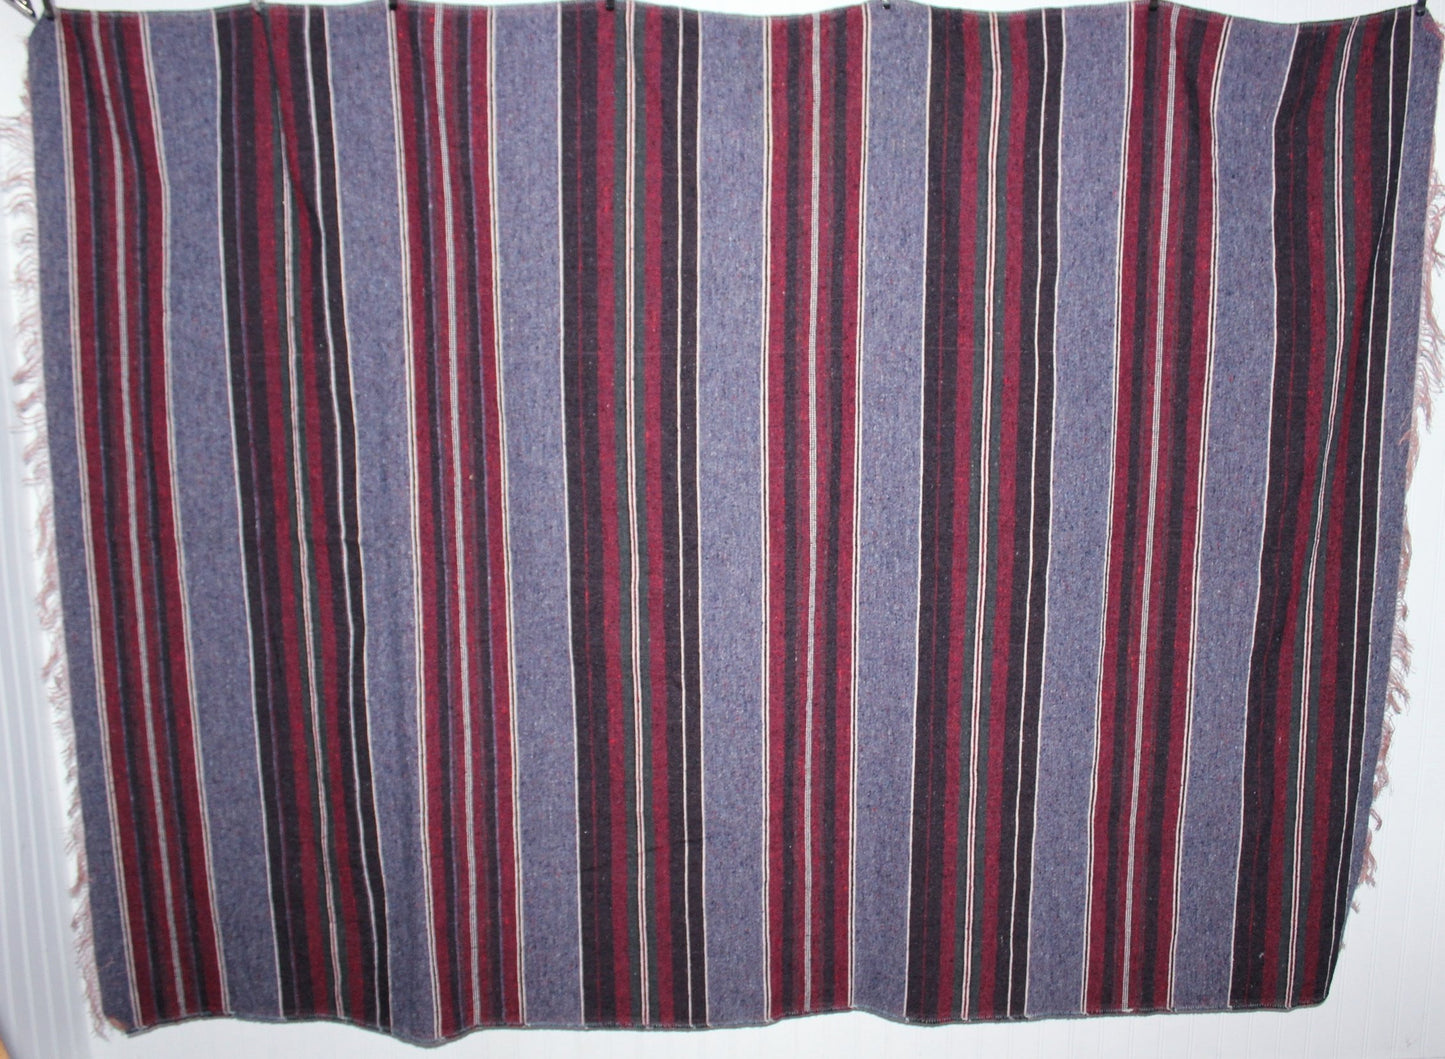 Fringed Blanket Travel Rug Loomed Dense Blues Purples Stripe 80" X 58" Decor OOAK sofa throw